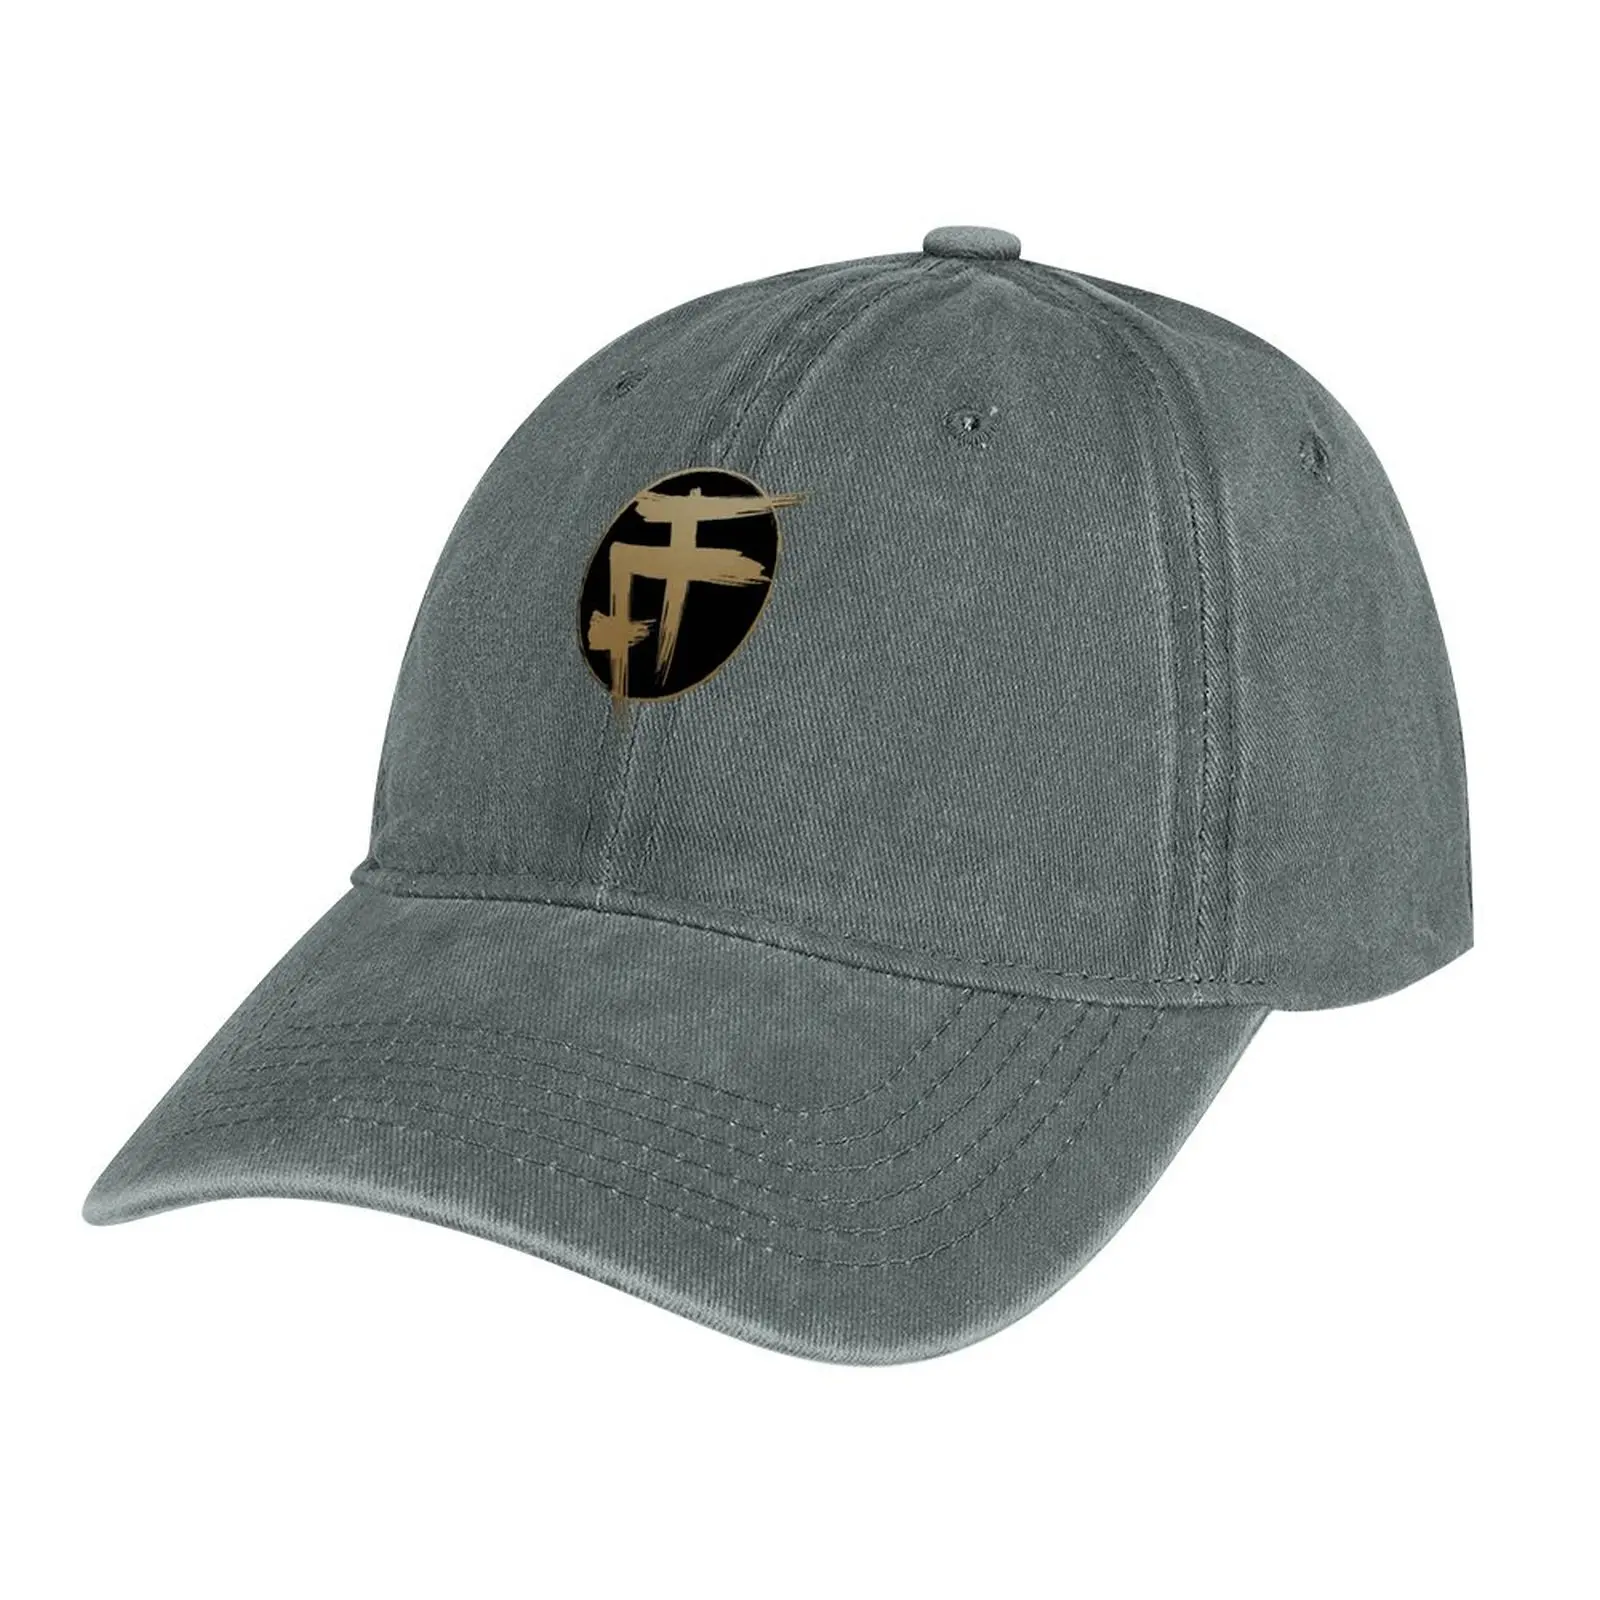 

Fonky Family nice logo Cowboy Hat New In The Hat Sunscreen Trucker Hats For Men Women's